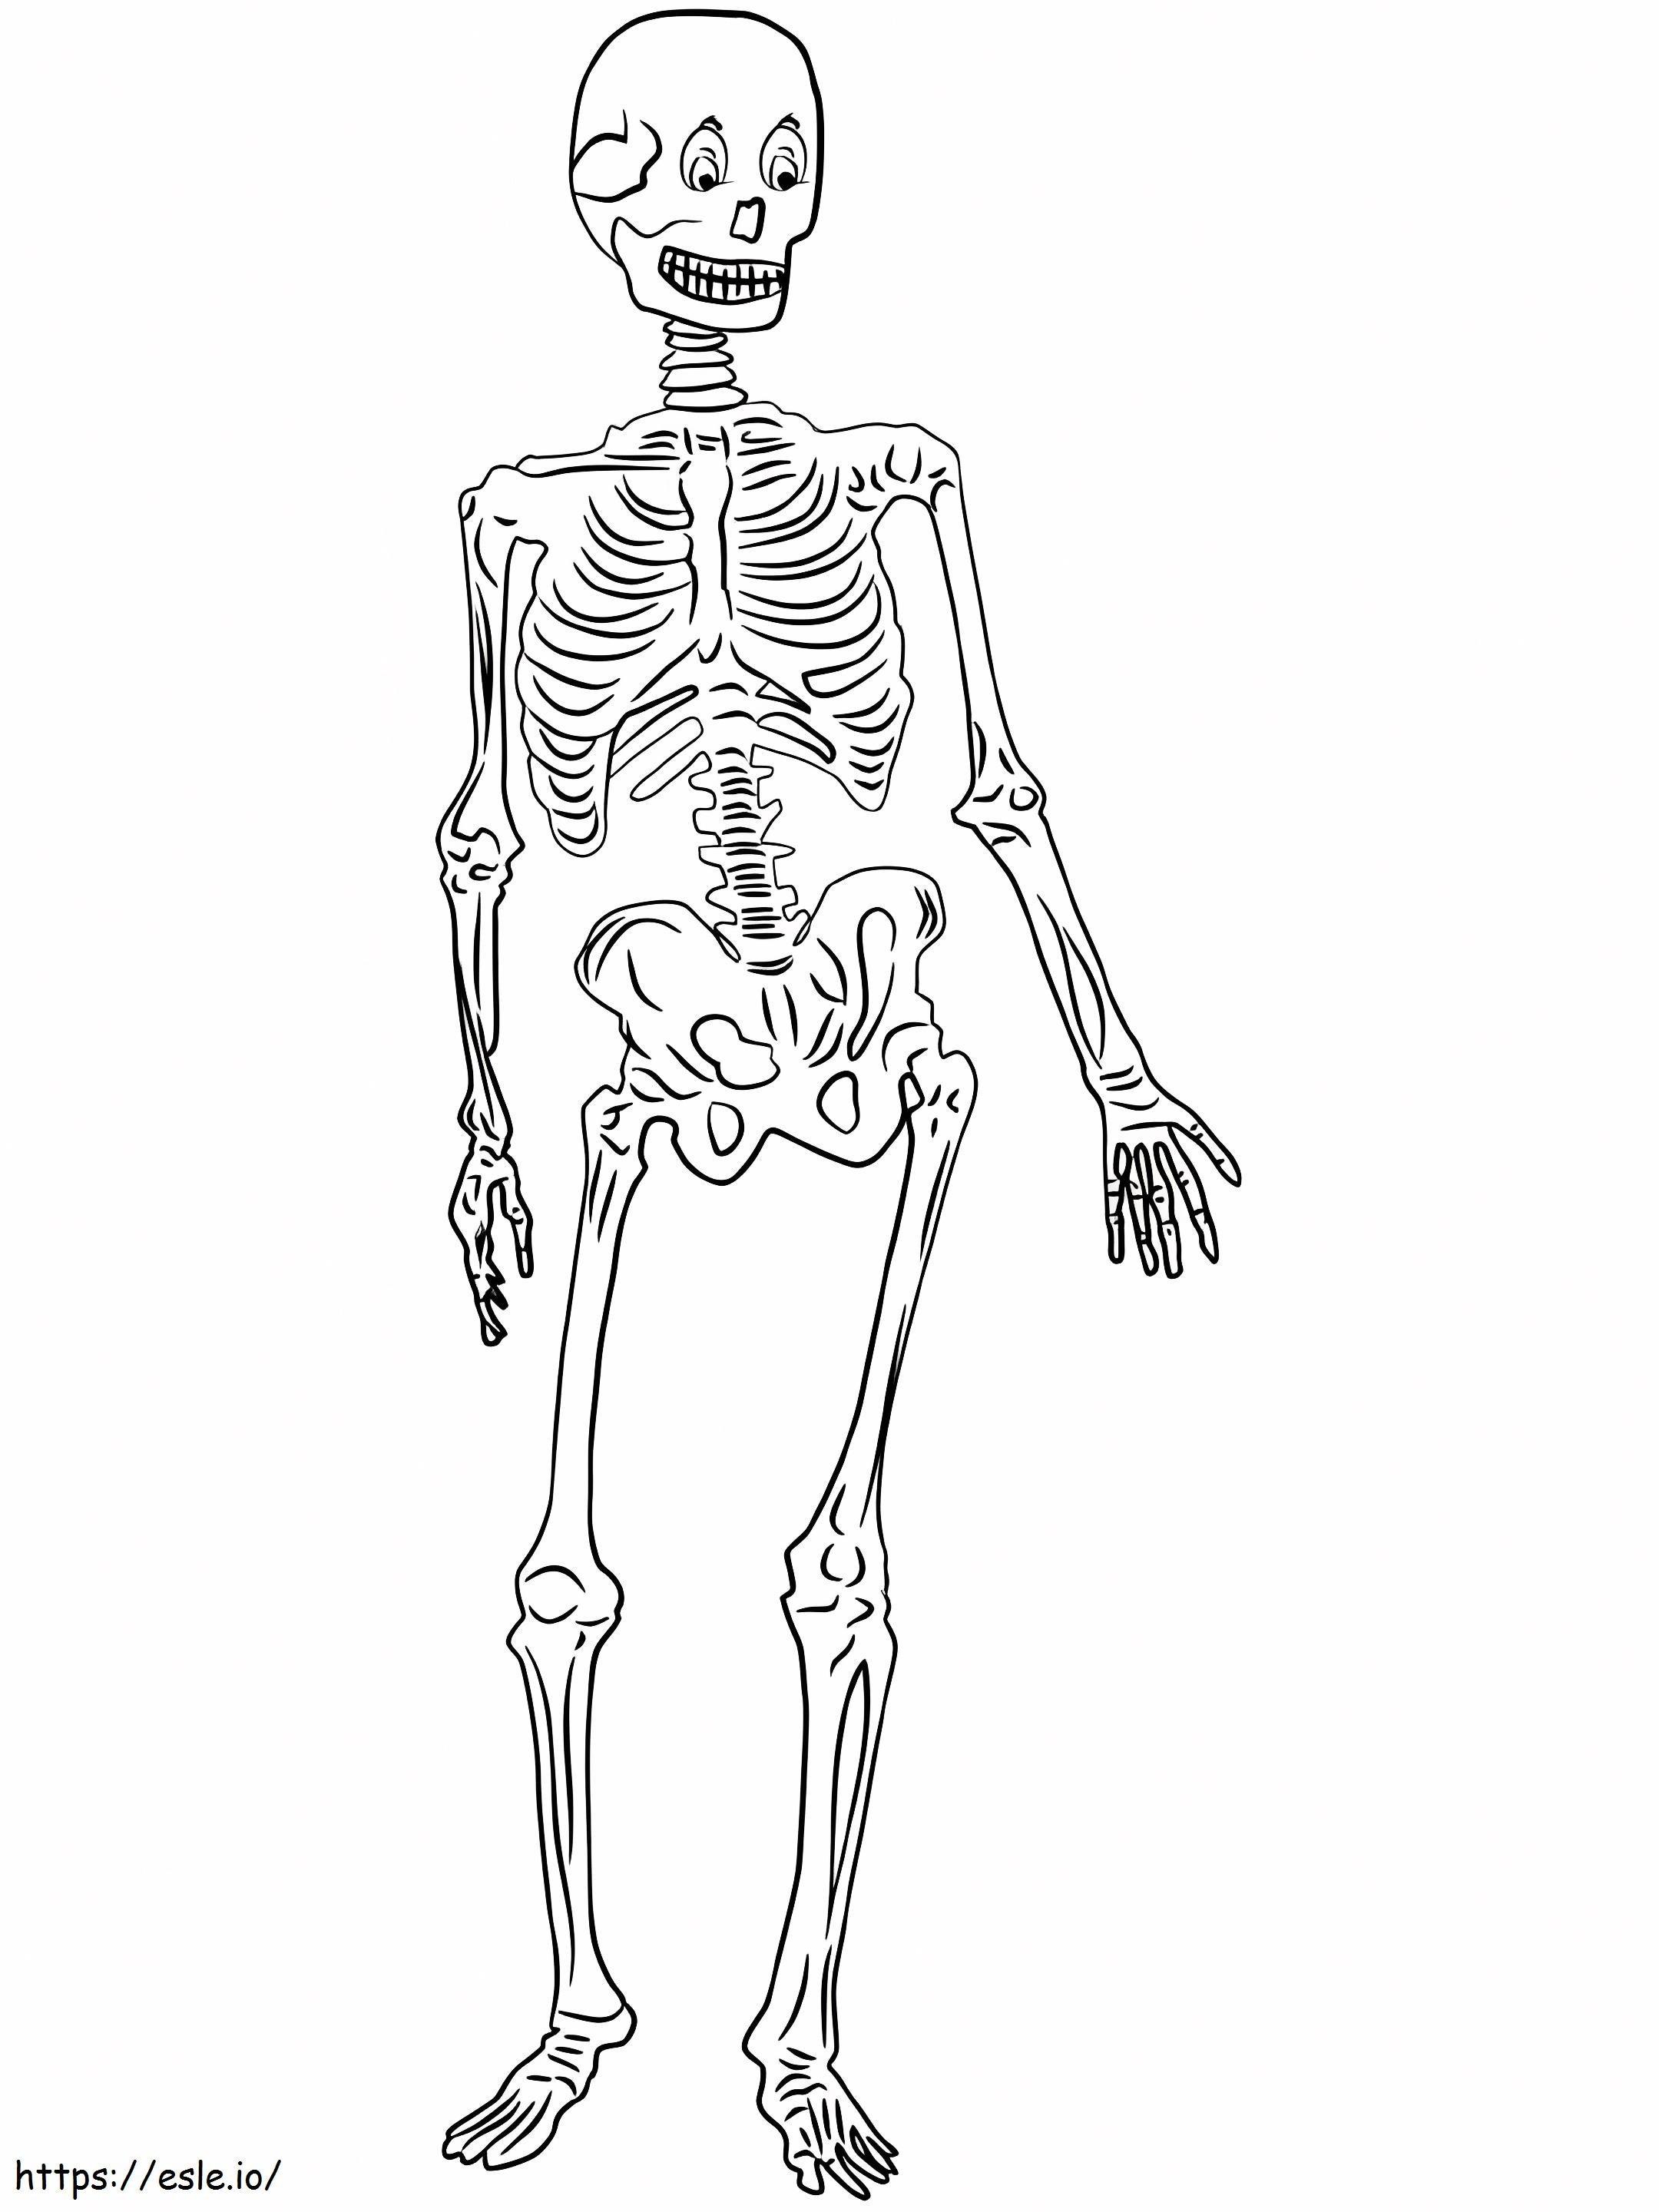 Good Skeleton coloring page